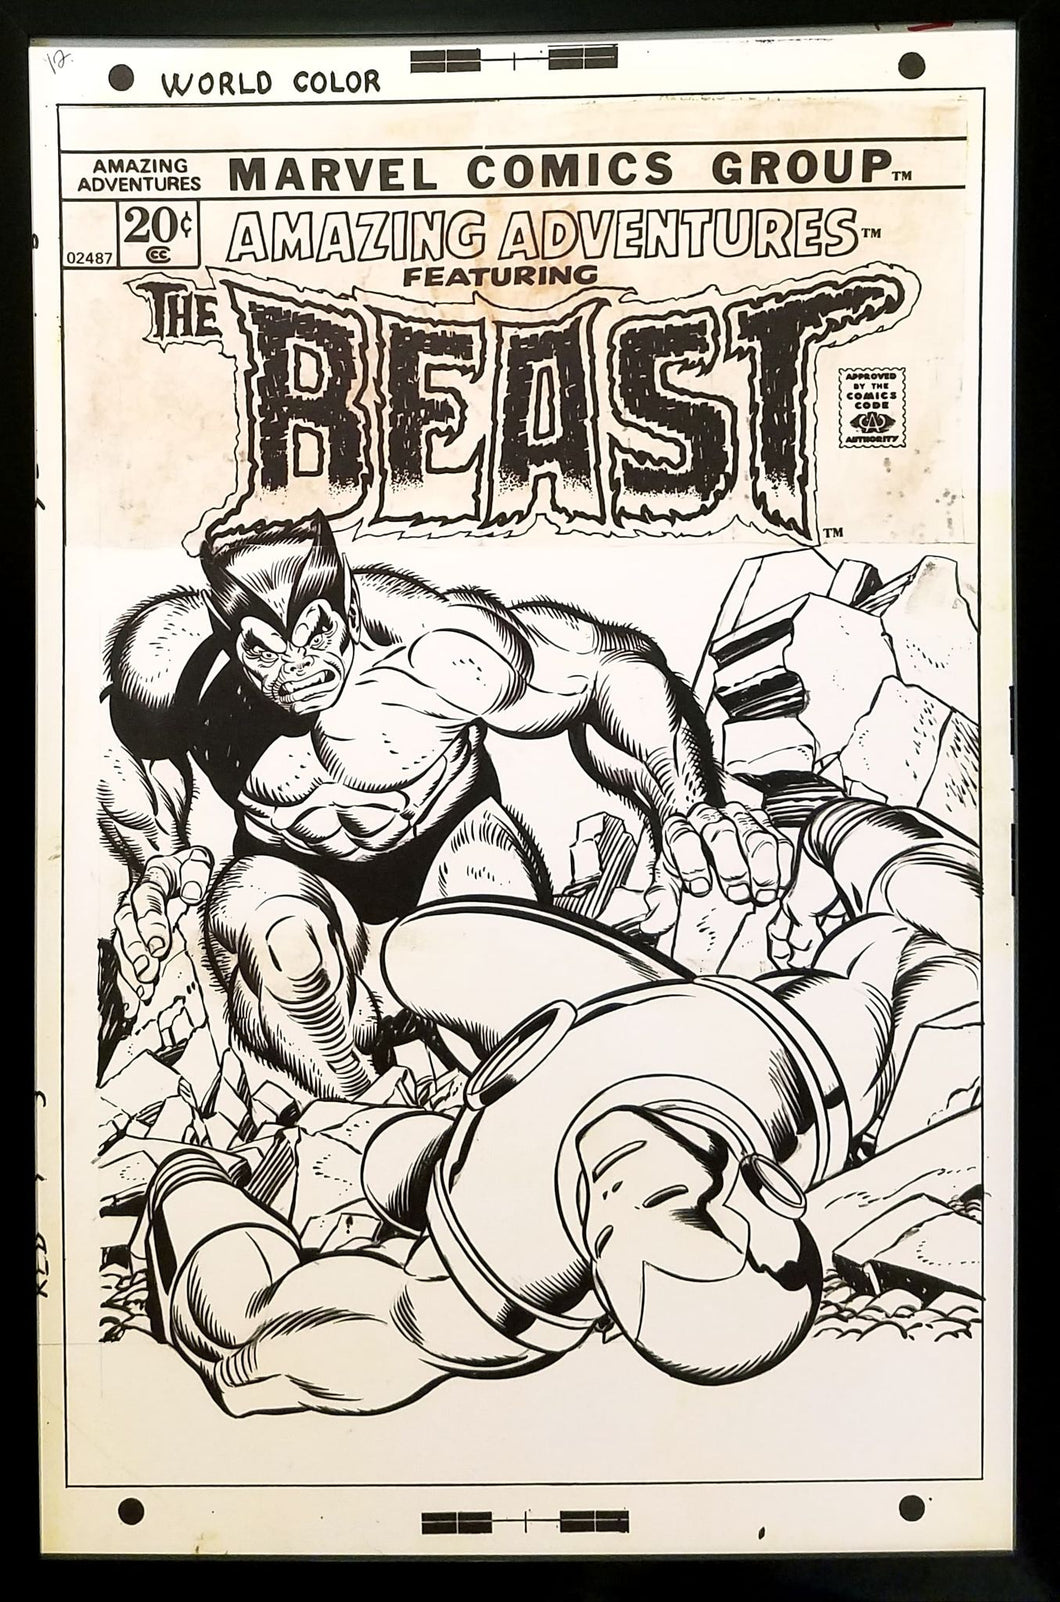 Amazing Adventures Iron Man #12 by Gil Kane 11x17 FRAMED Original Art Poster Marvel Comics